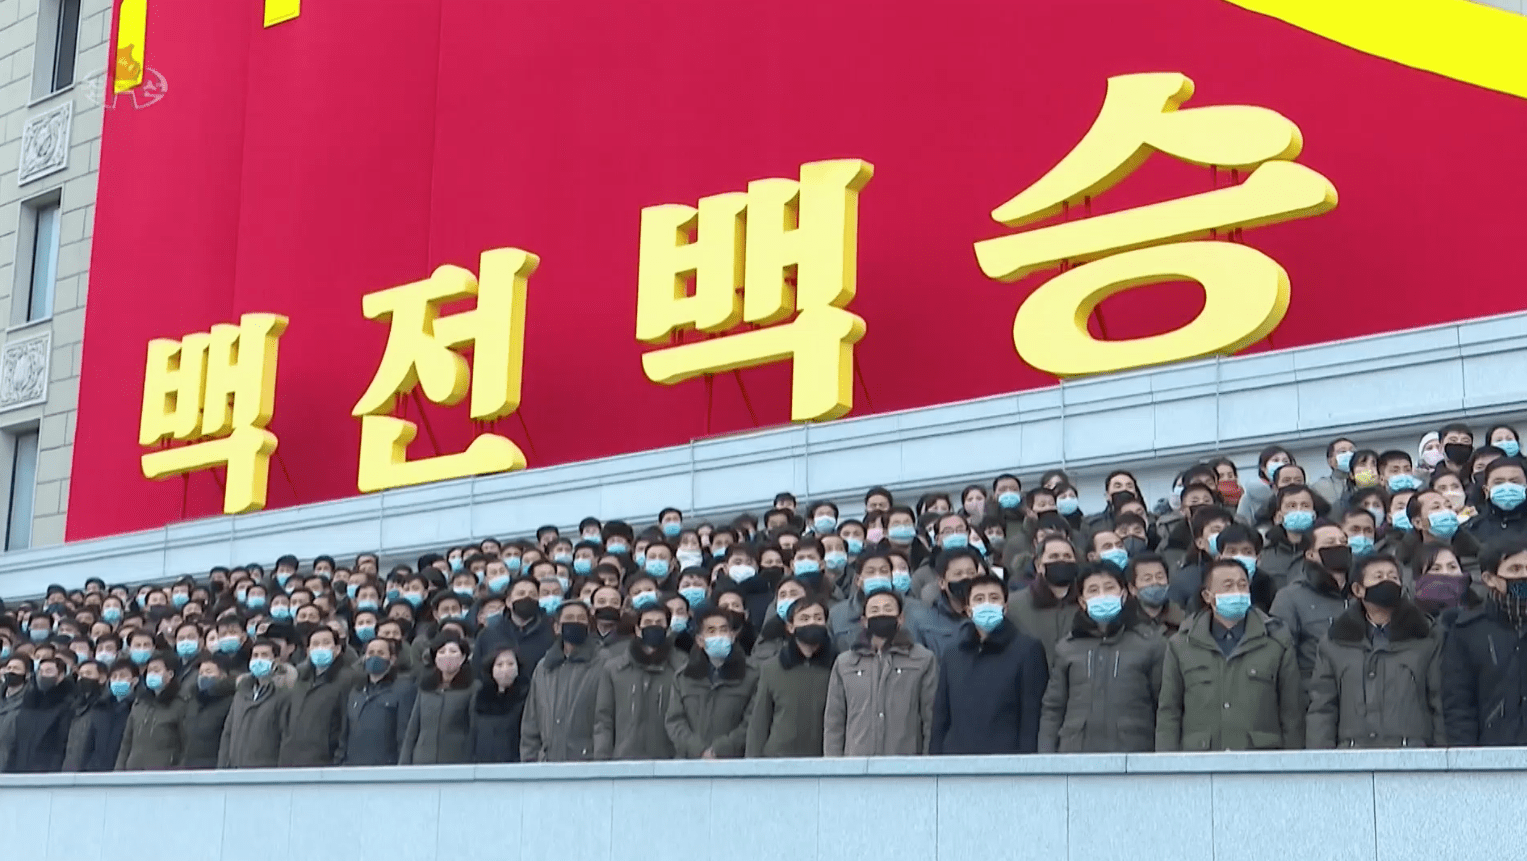 kctv-jan17-pyongyang-kim-il-sung-square-army-people-rally-propaganda-slogans-posters-post-congress2-00002.png